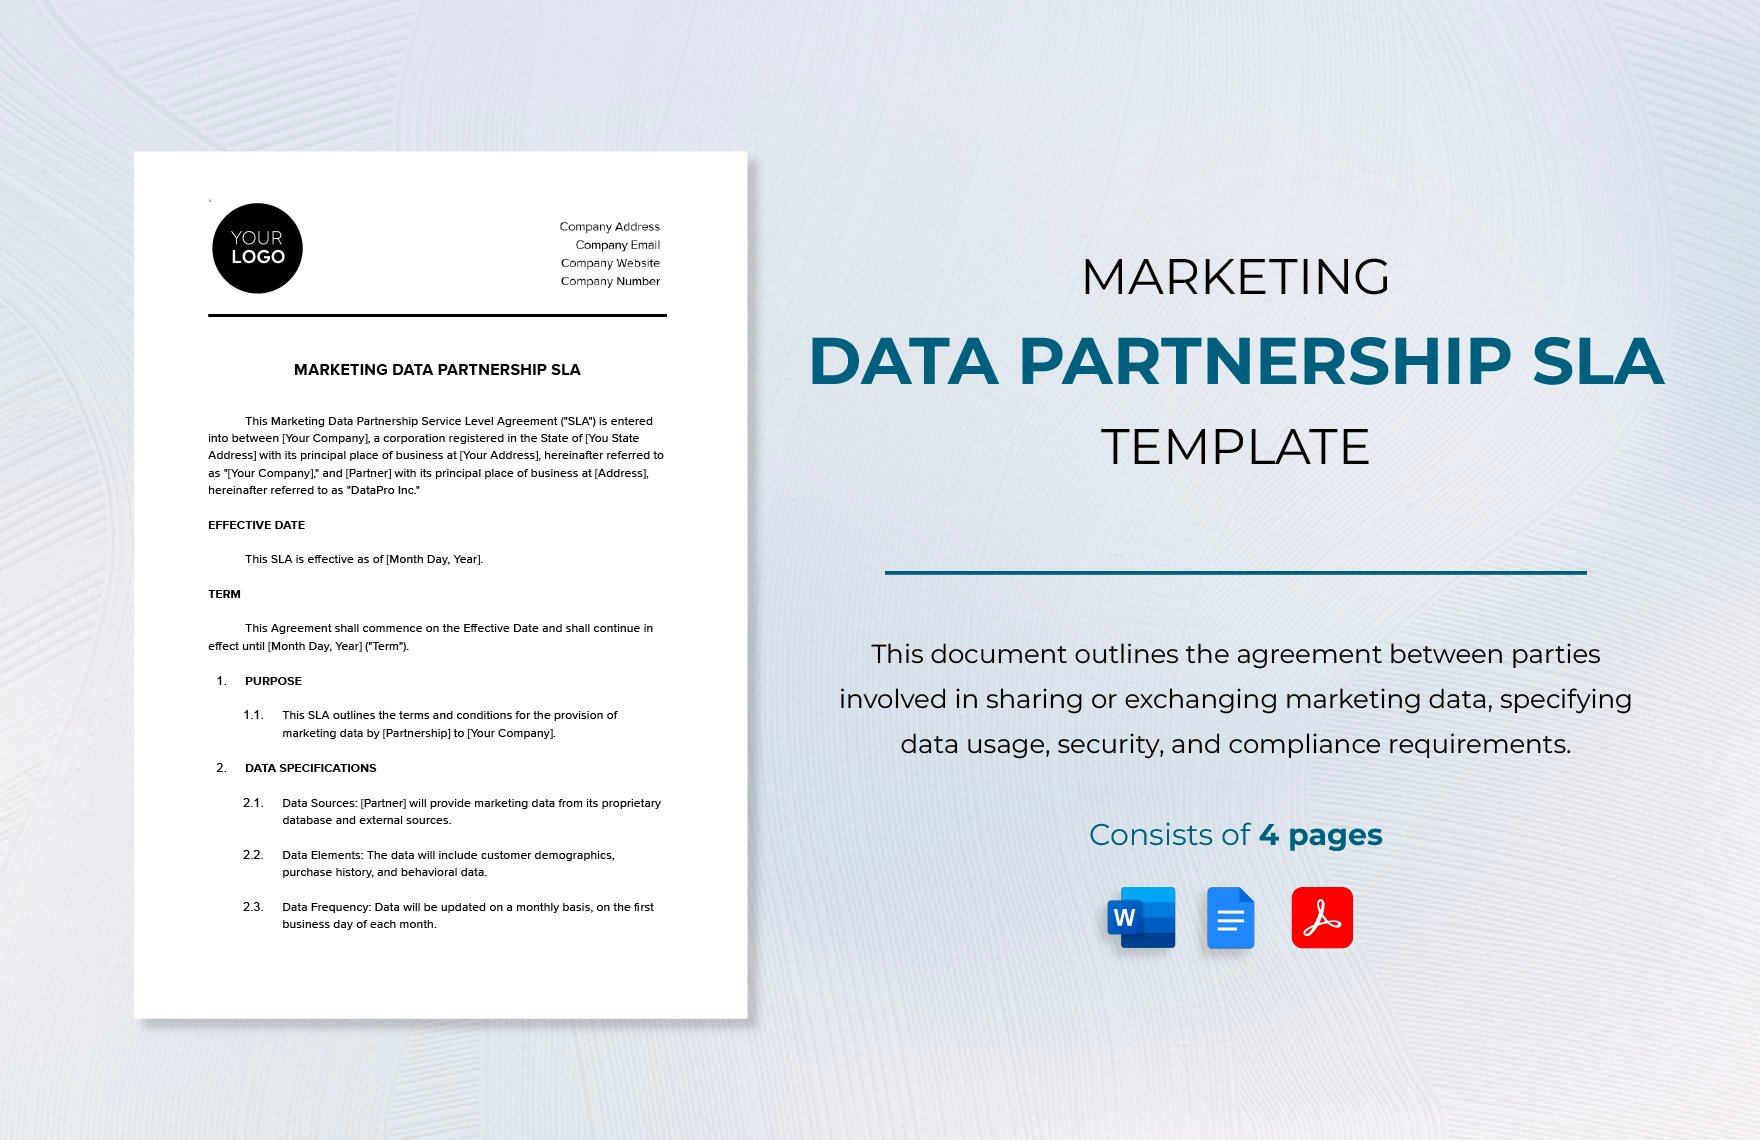 Marketing Data Partnership SLA Template